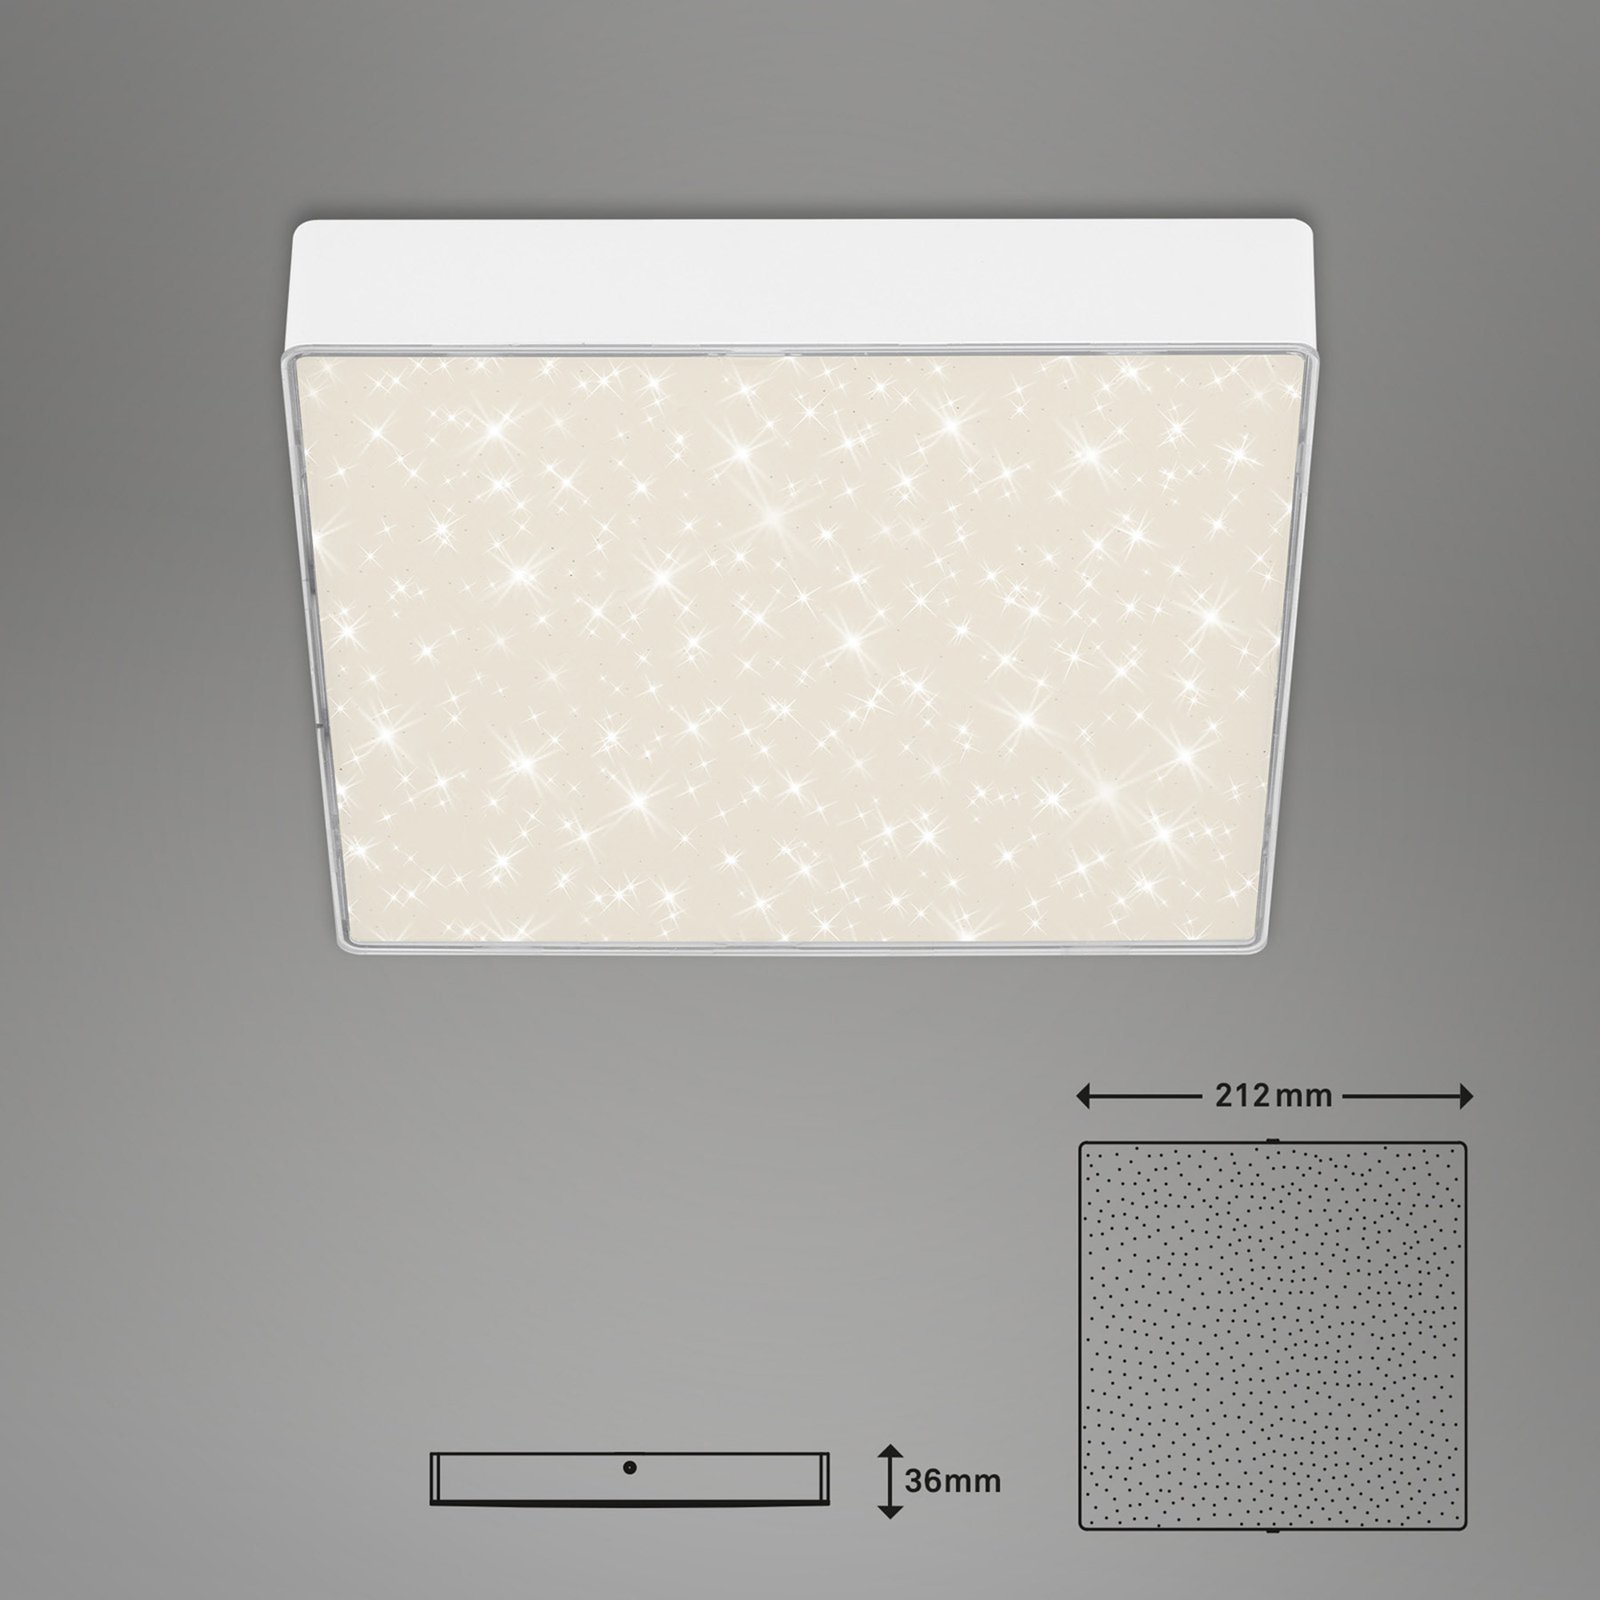 Lampa sufitowa LED Flame Star, 21,2 x 21,2 cm, biała